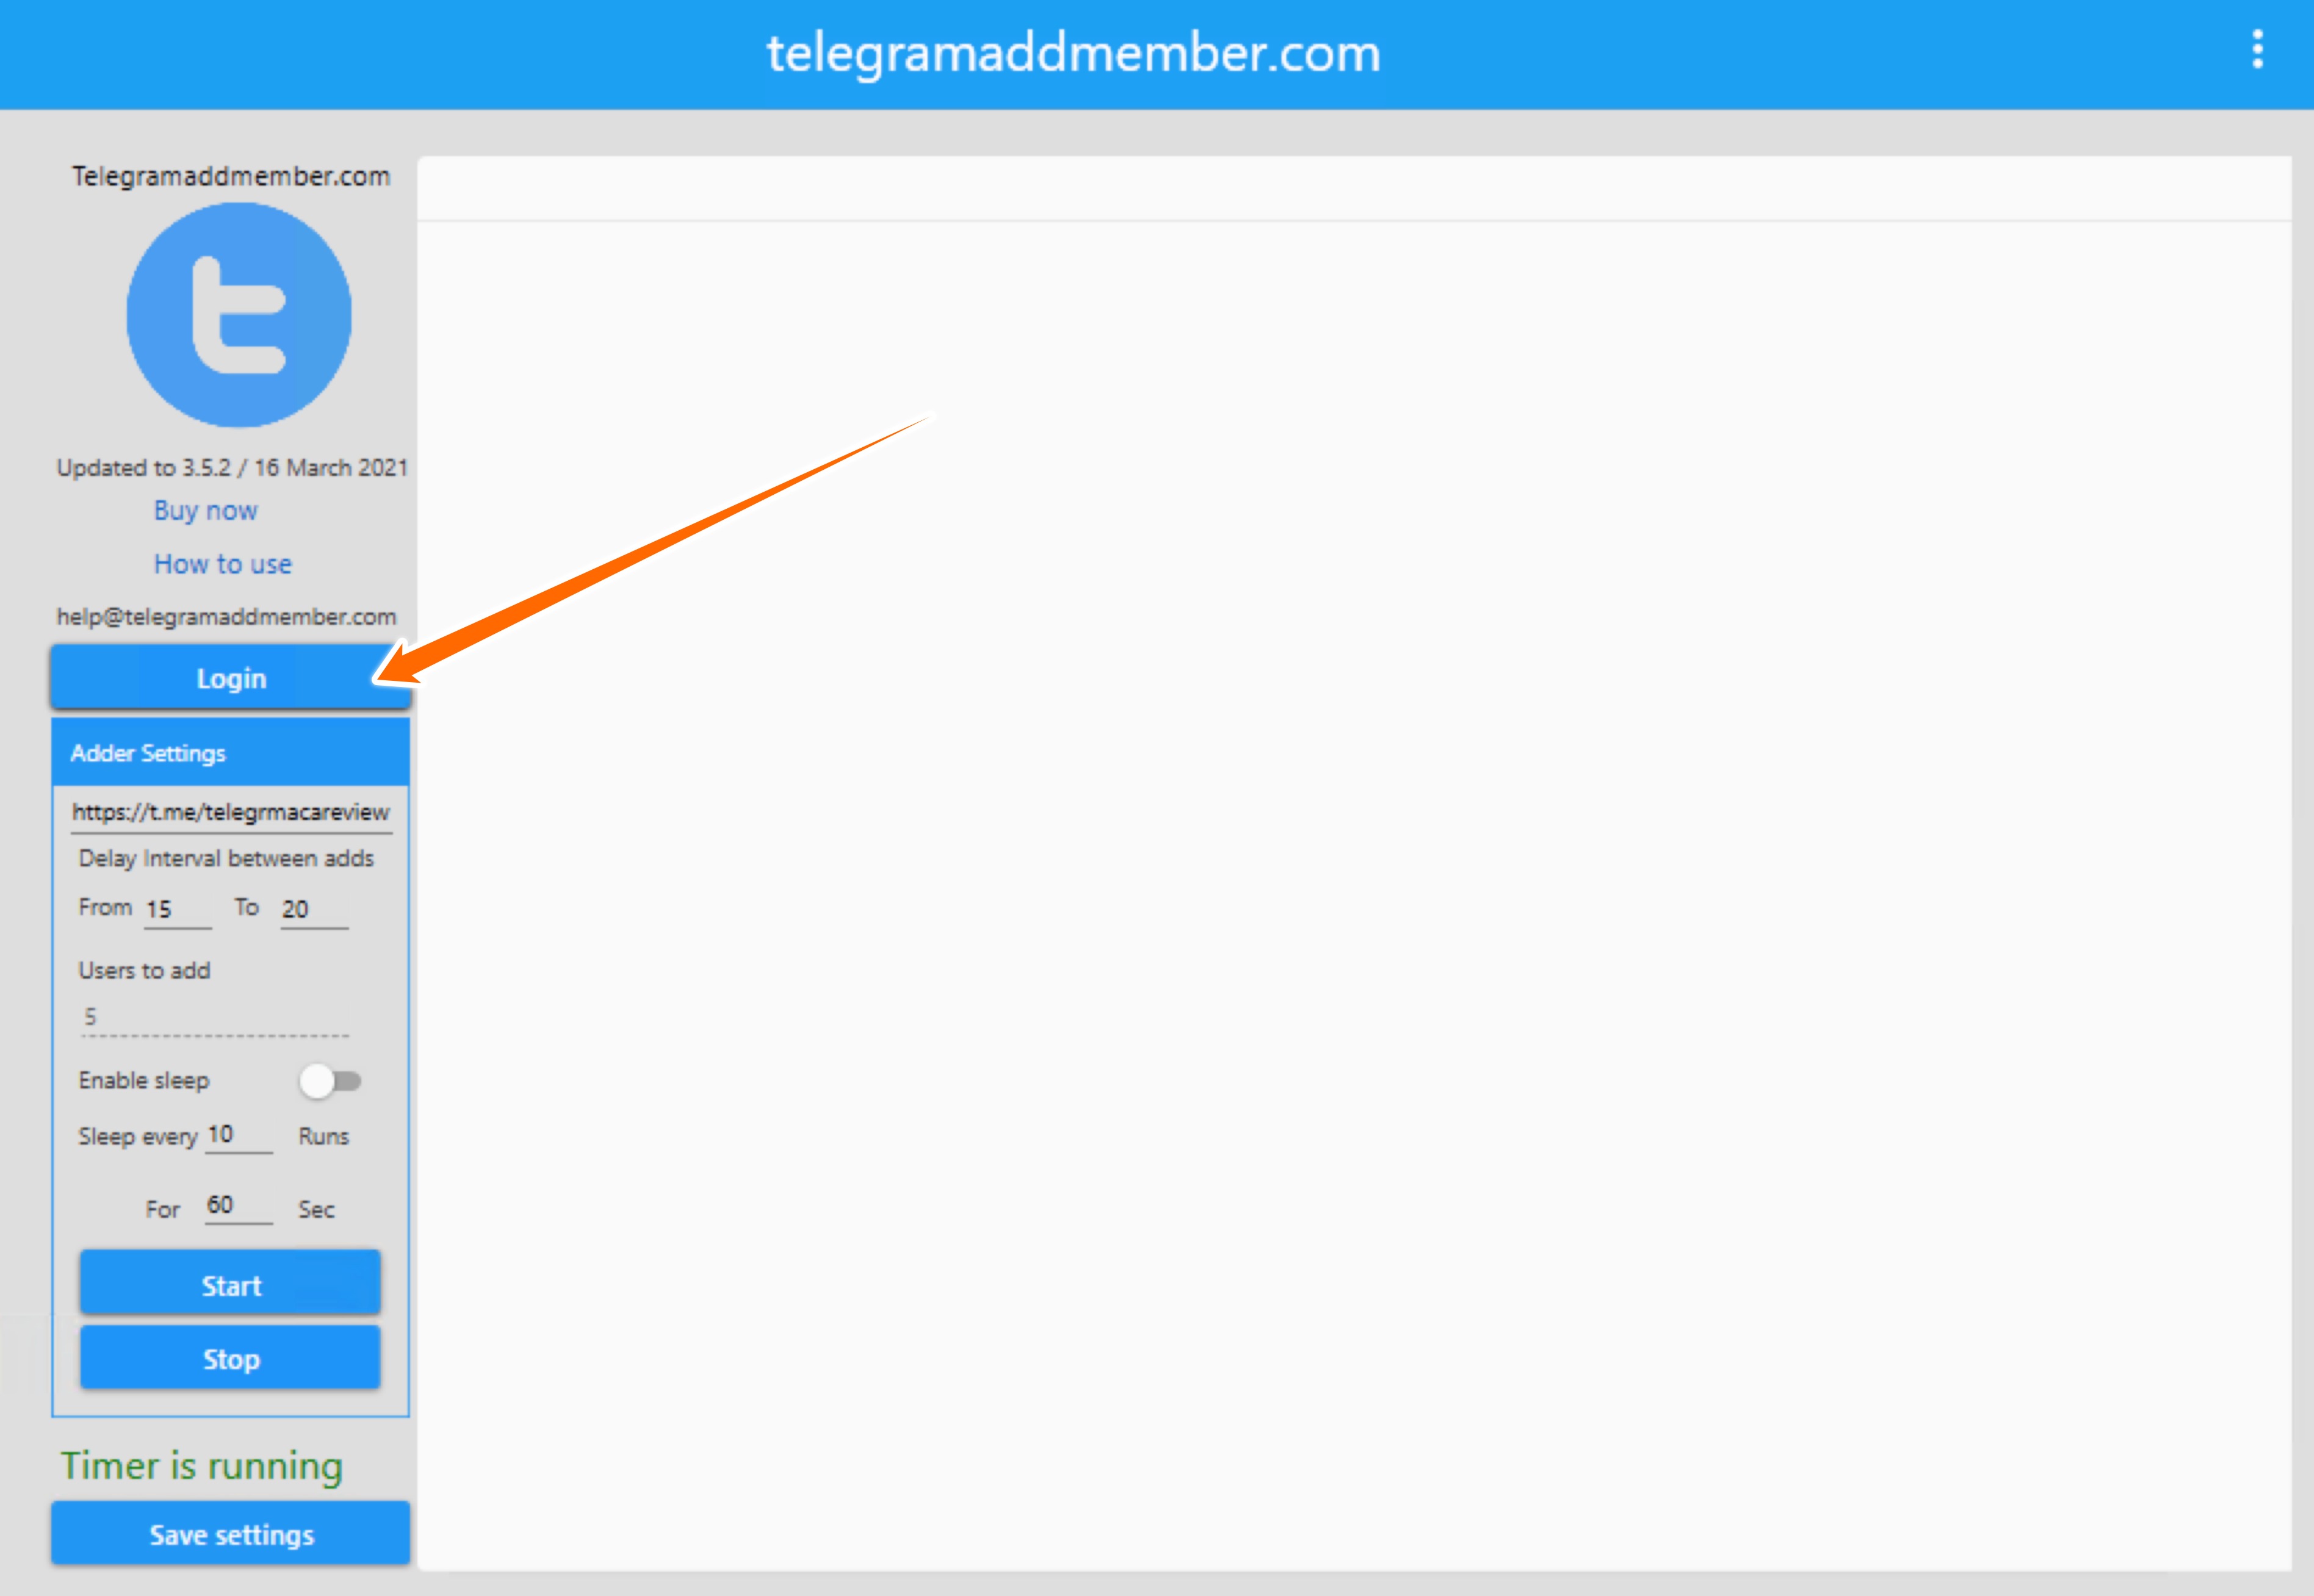 telegram add member login